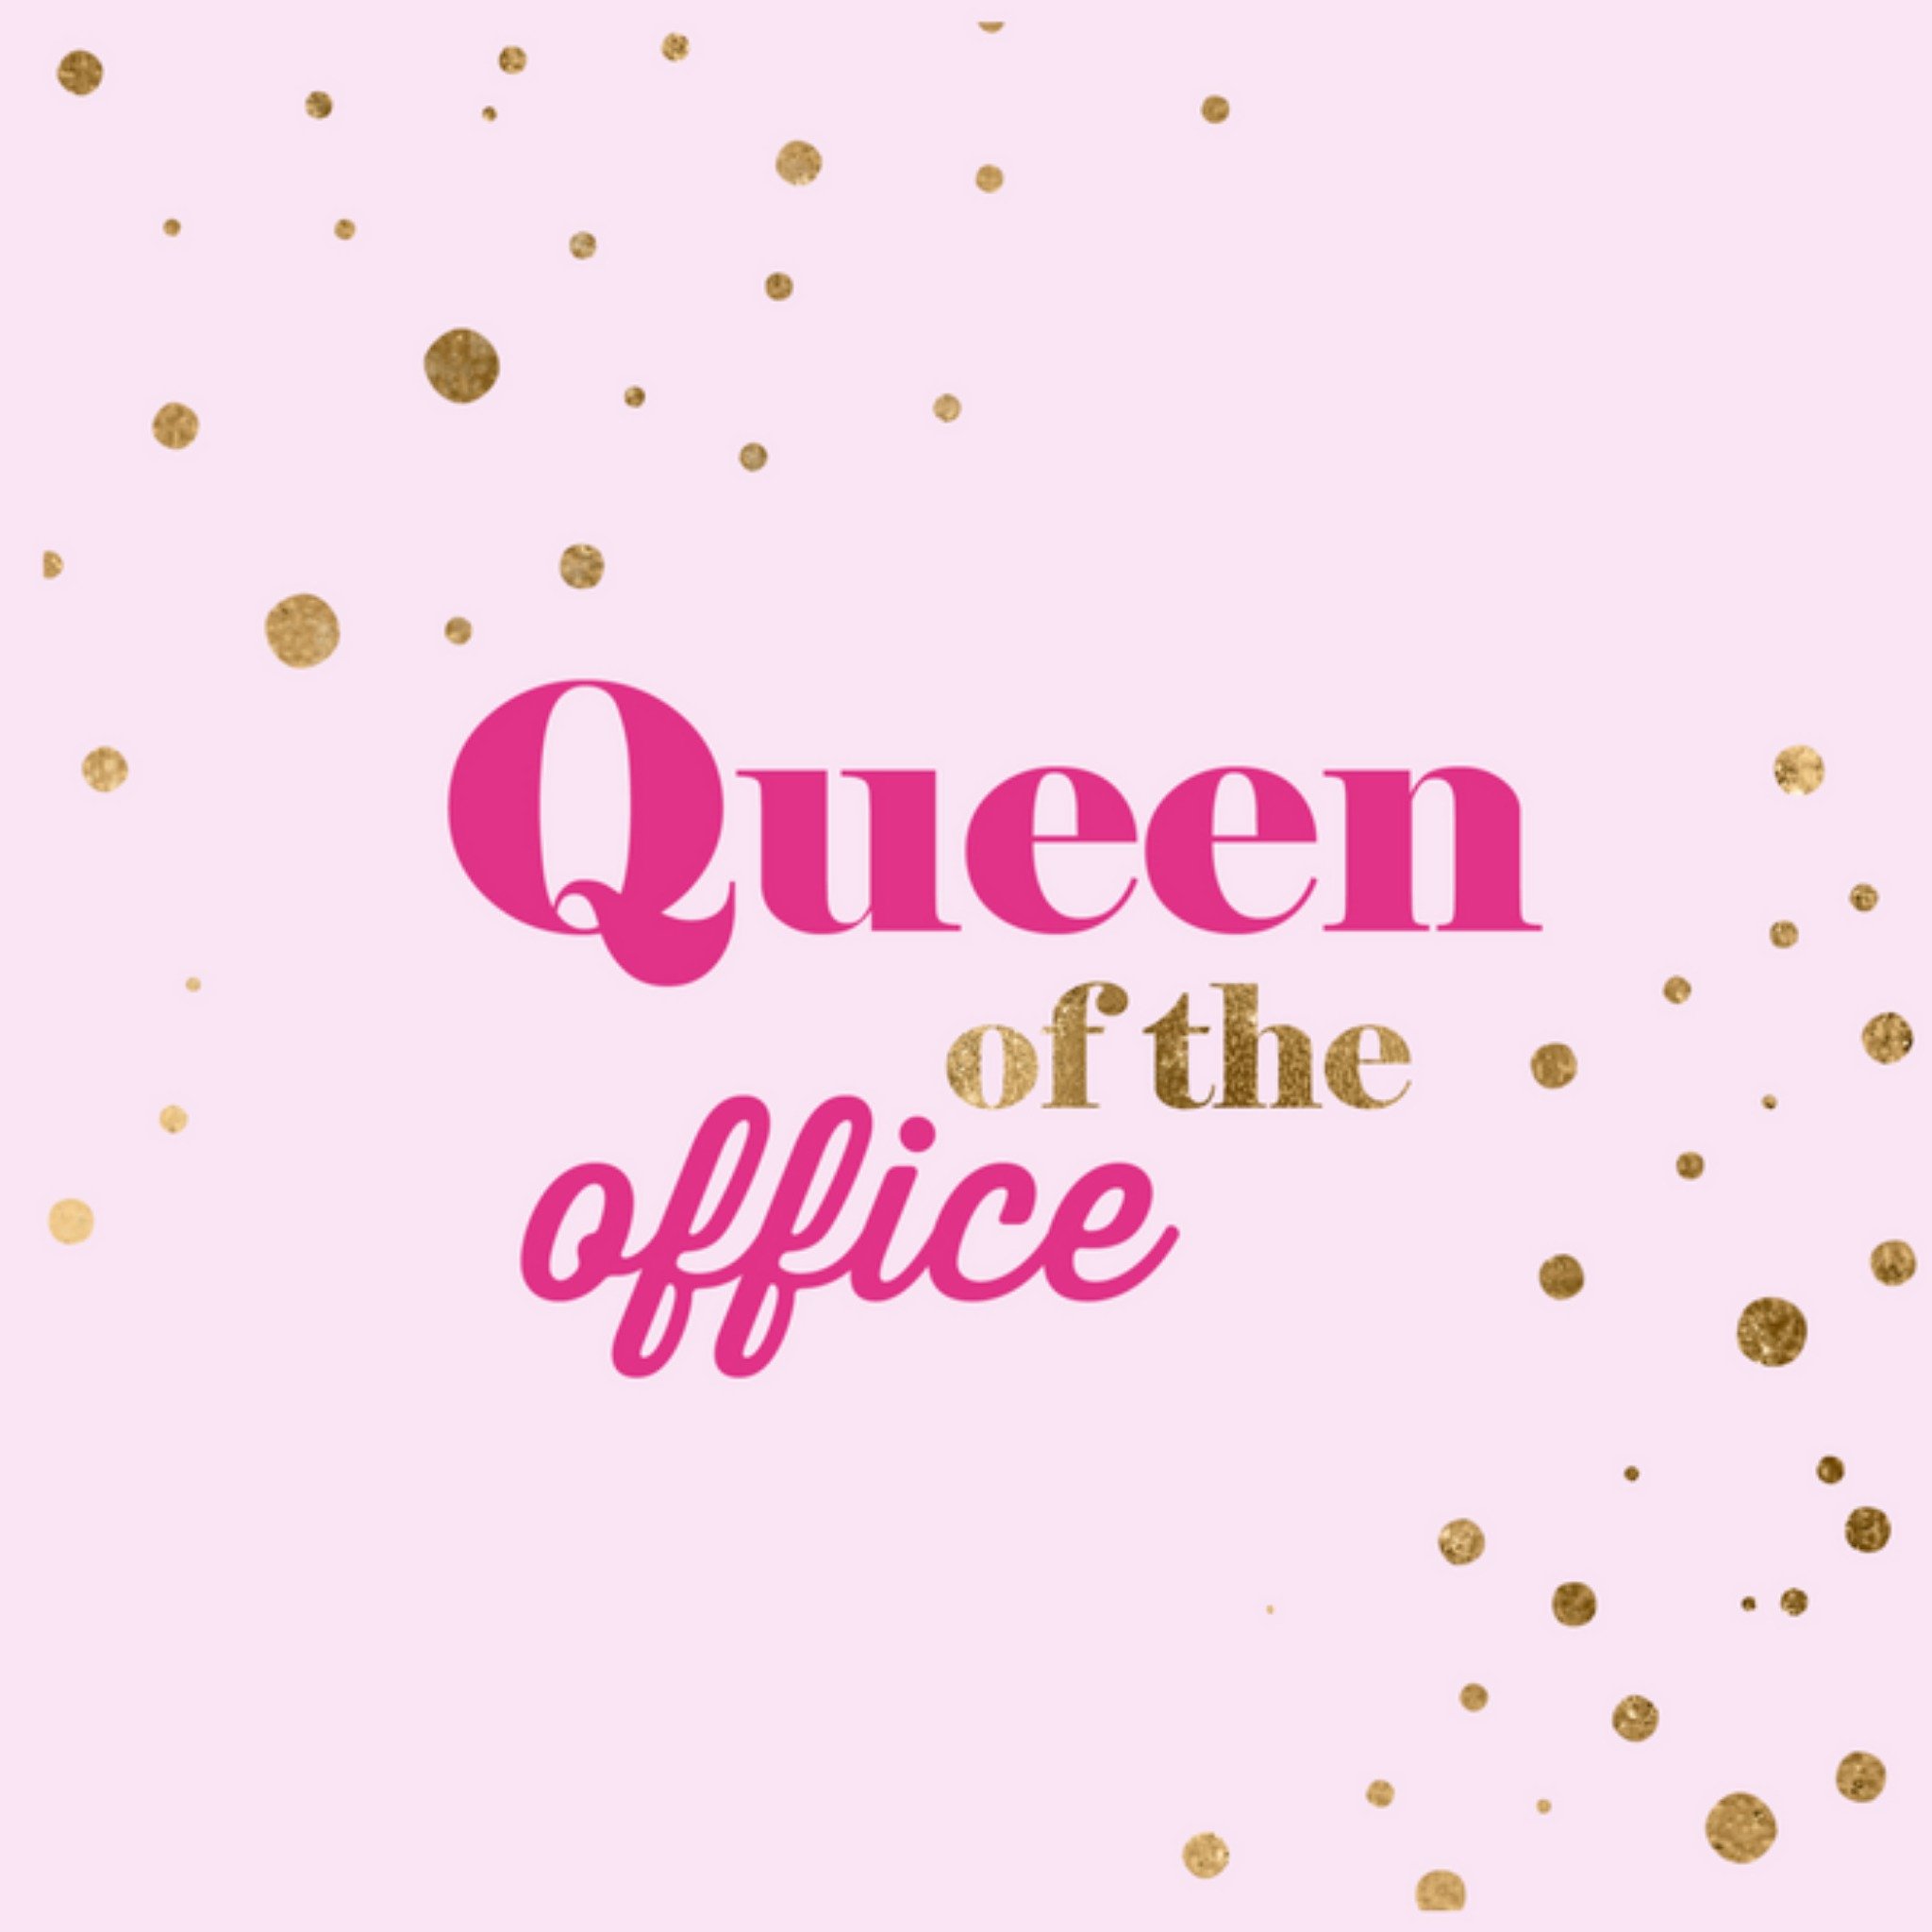 Secretaressedag - queen of the office